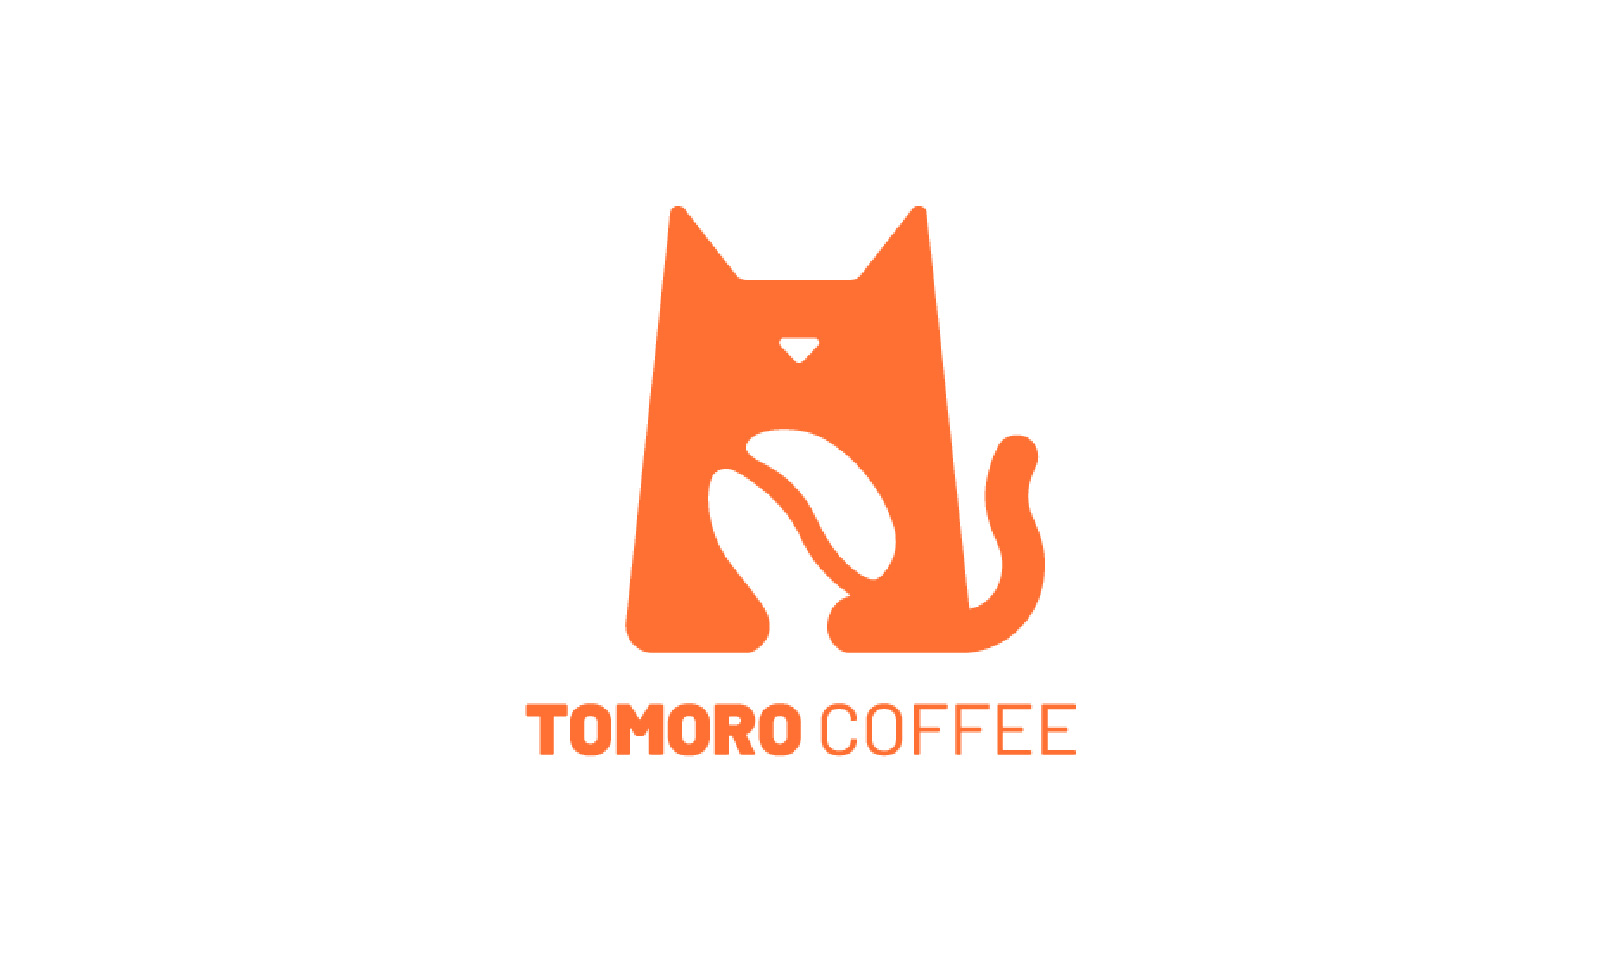 PT Kopi Bintang Indonesia (Tomoro Coffee)